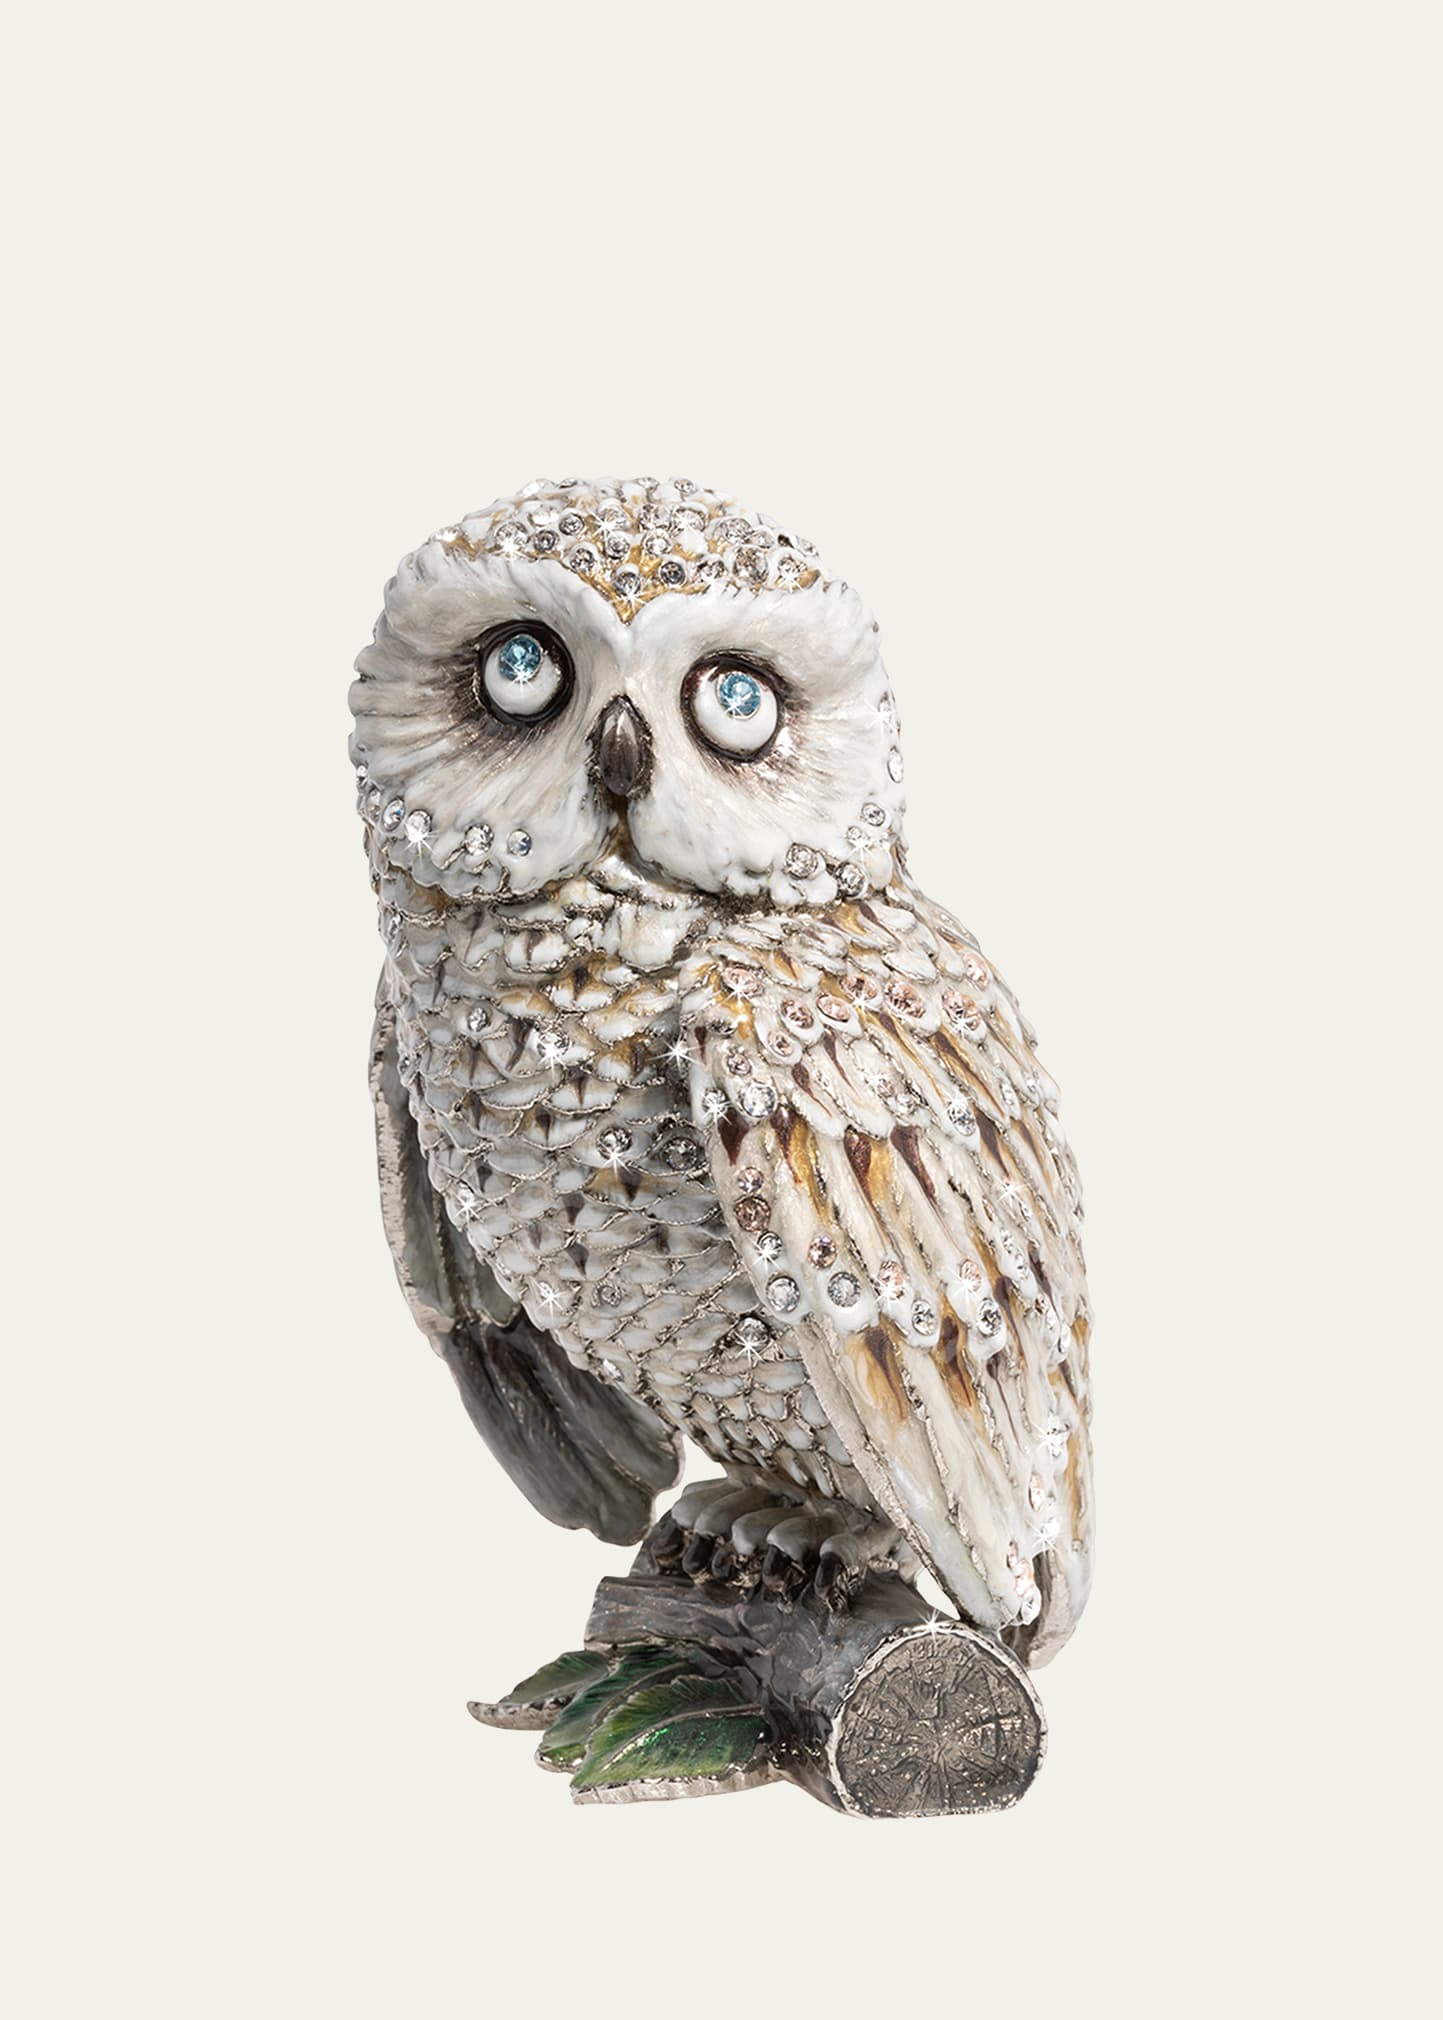 5" Snow Owl Figurine